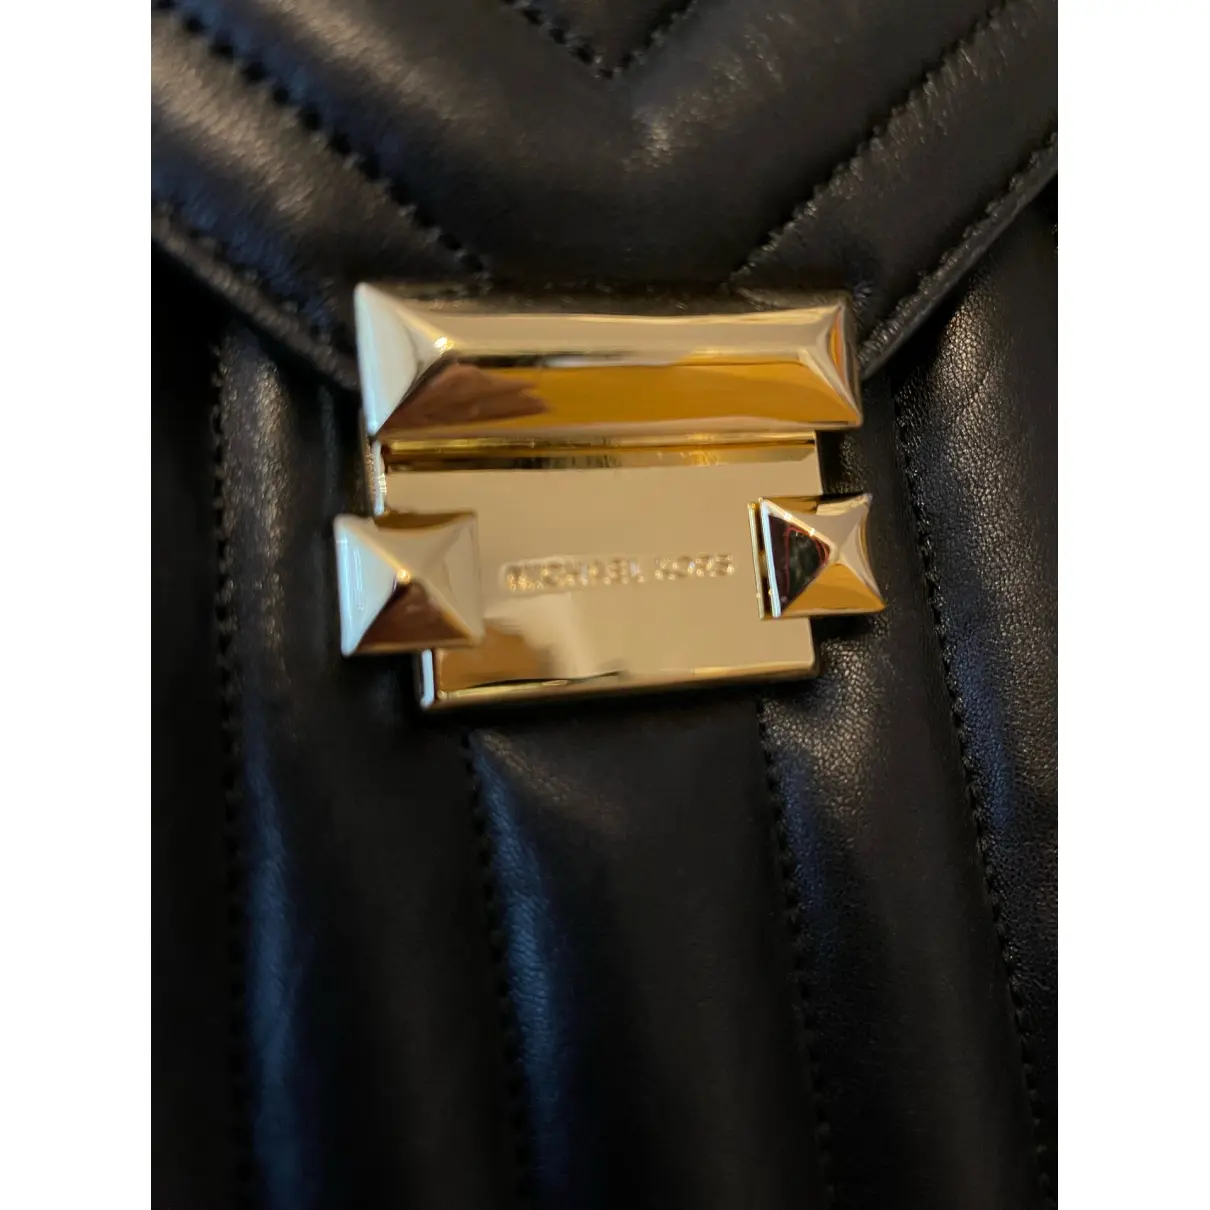 Buy Michael Kors Whitney leather backpack online